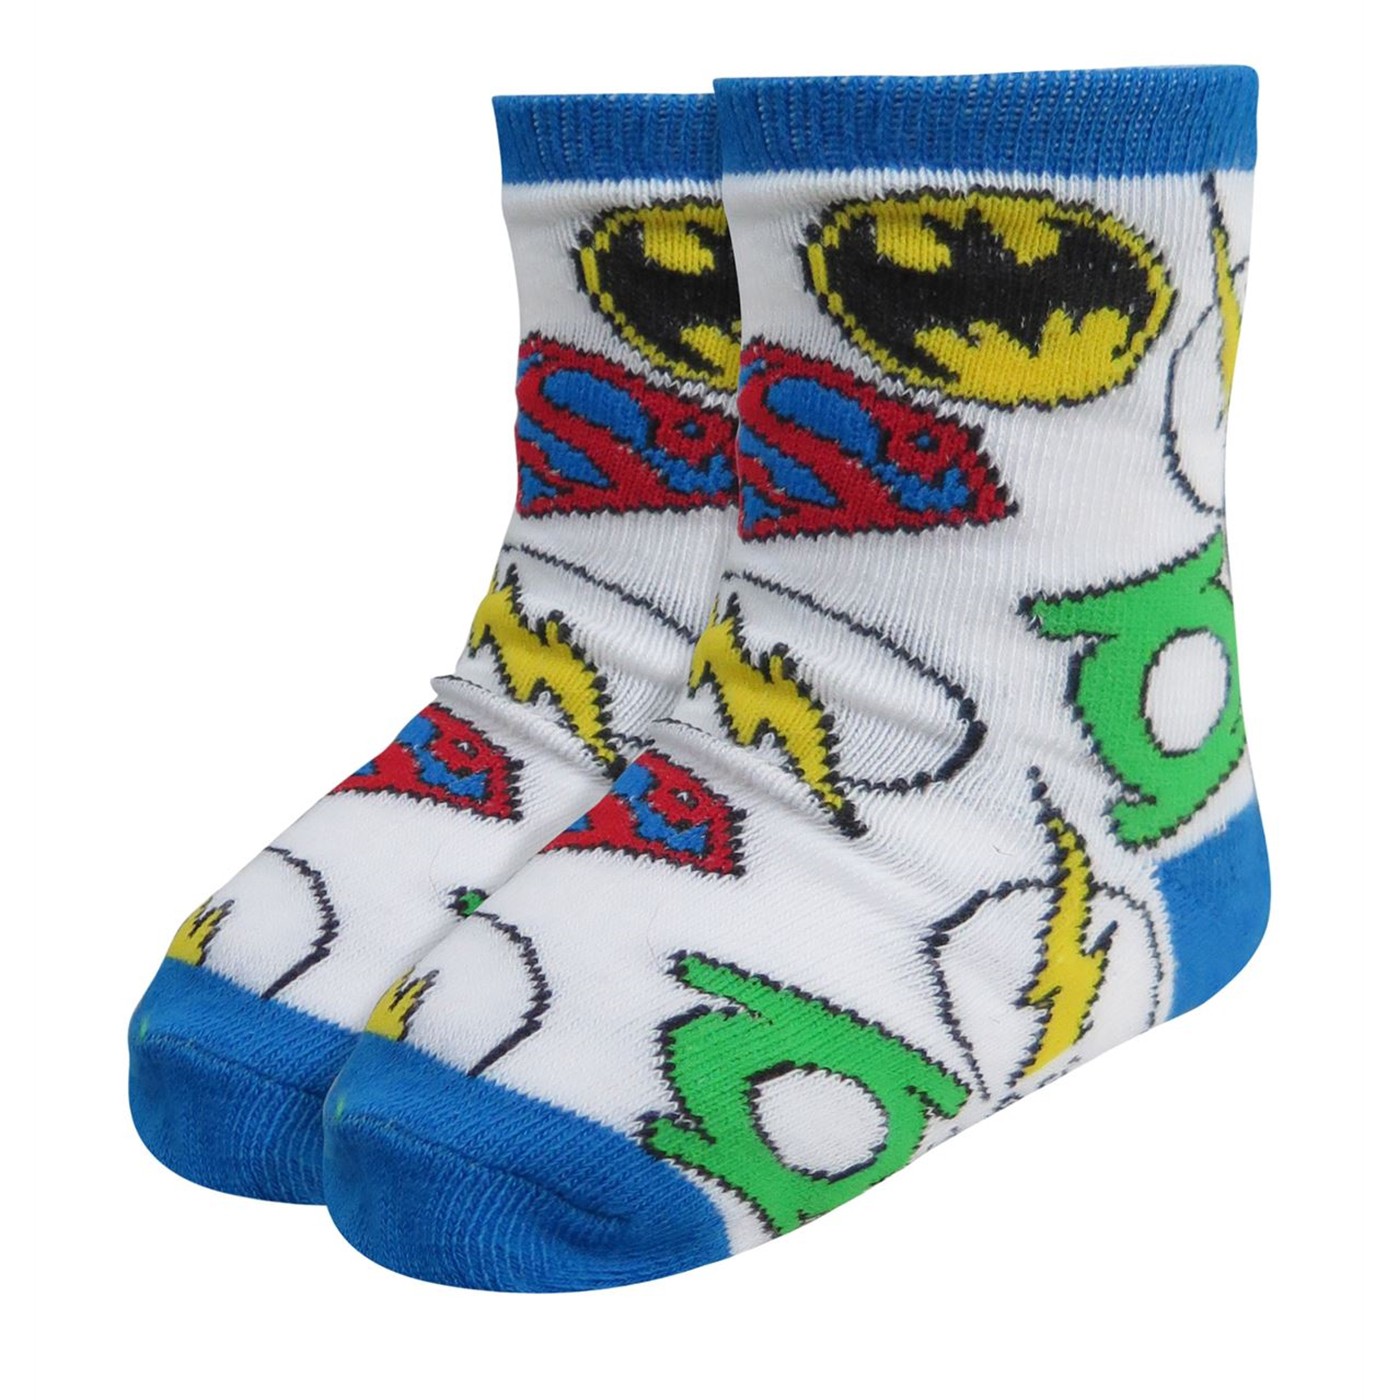 Justice League Action Kids Socks 6-Pack